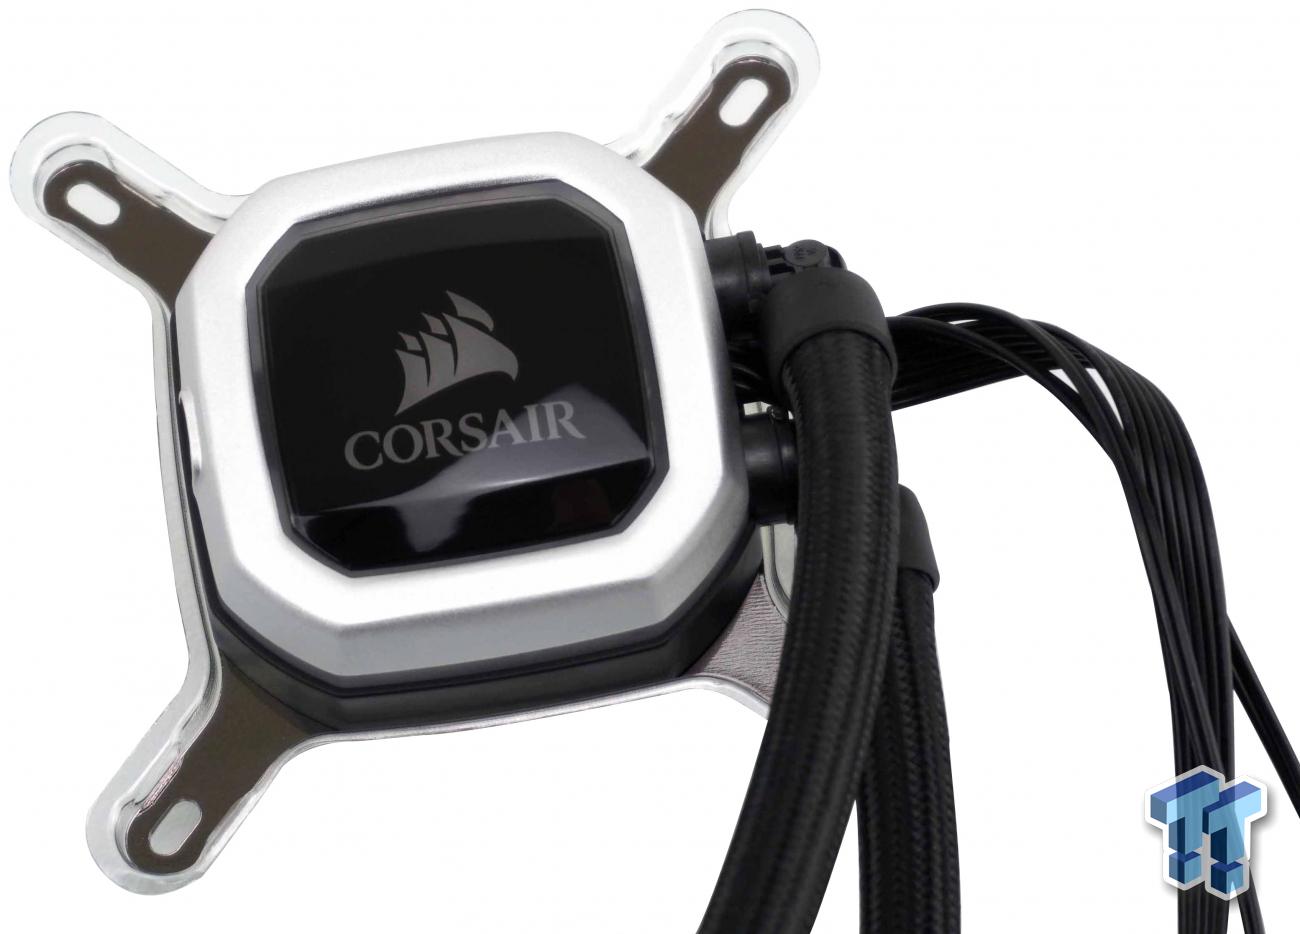 Corsair H100i PRO RGB CPU Cooler Review